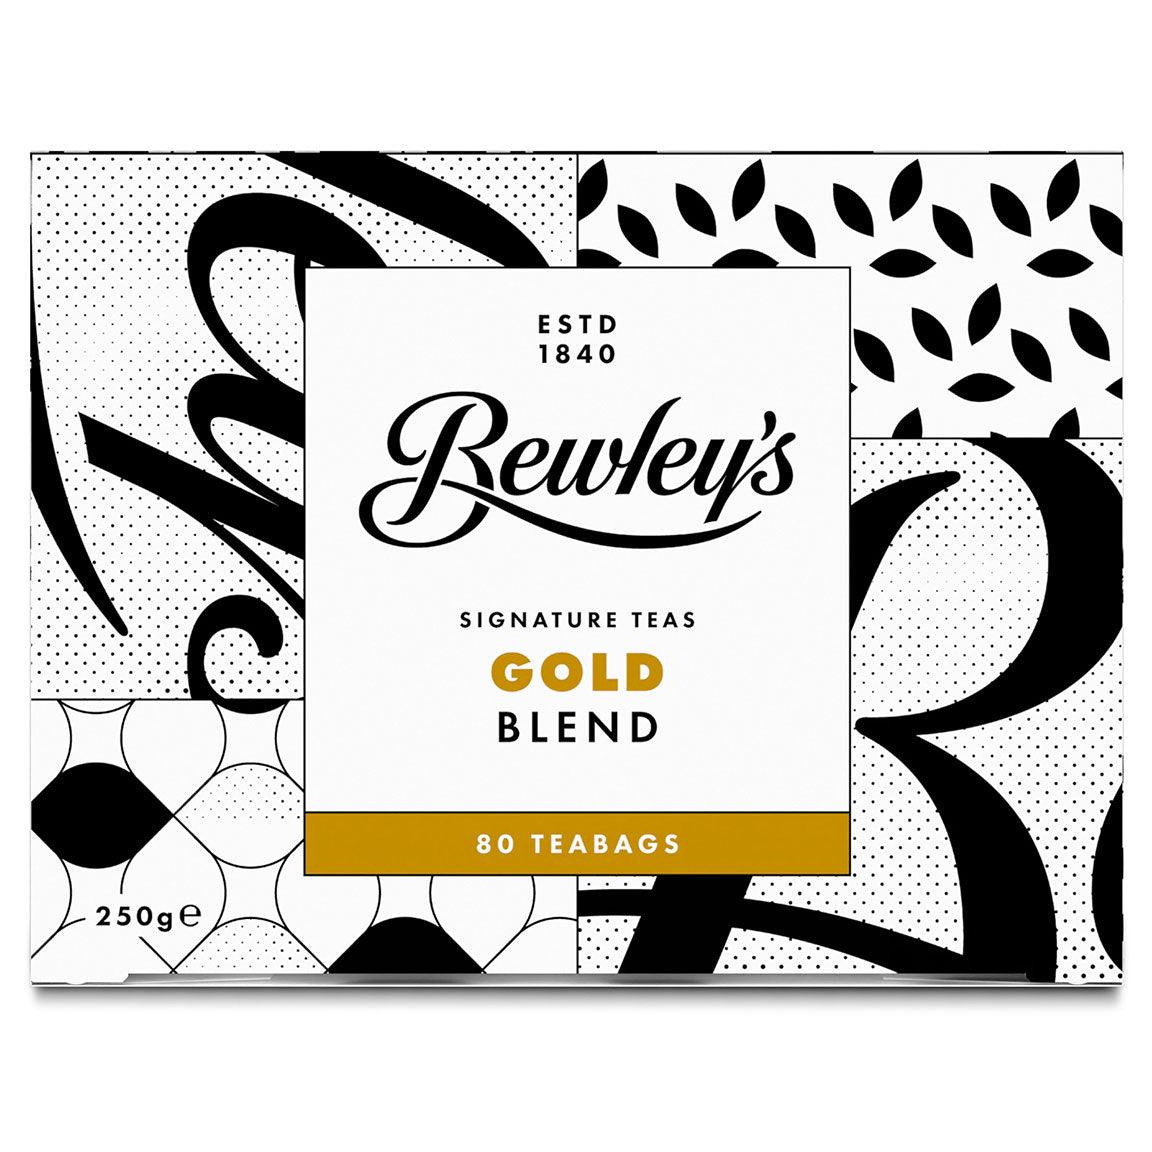 Bewleys Gold Blend Tea Bags